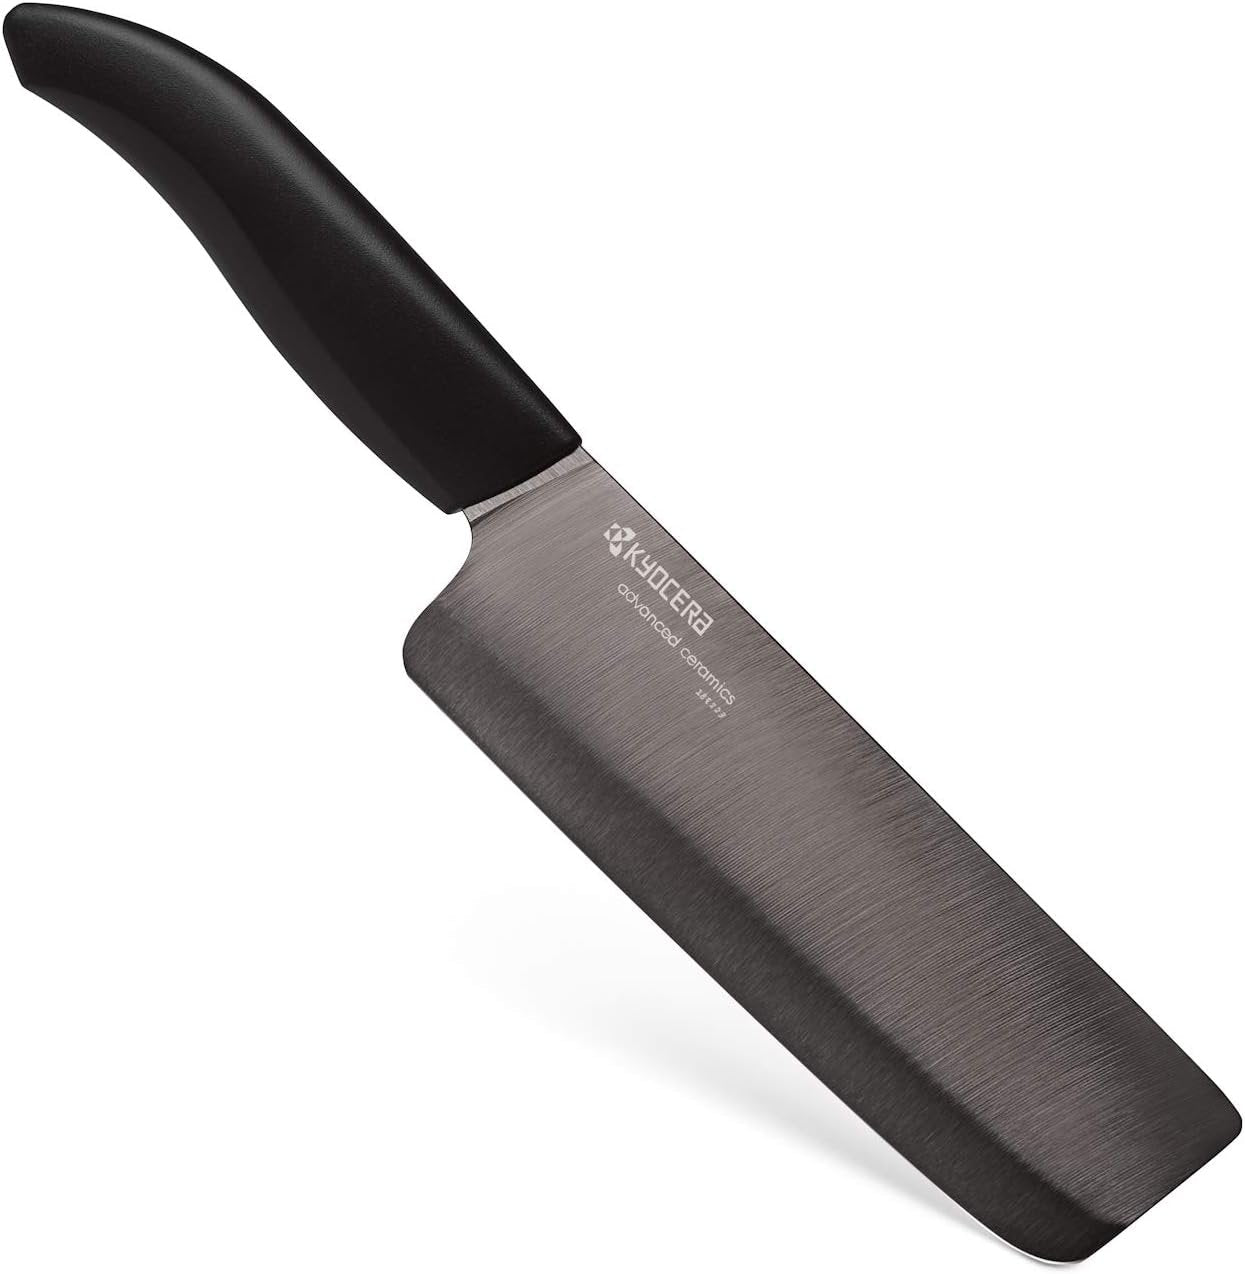 Kyocera Revolution Kitchen Knife, 6-inch Nakiri Vegetable Cleaver, Black